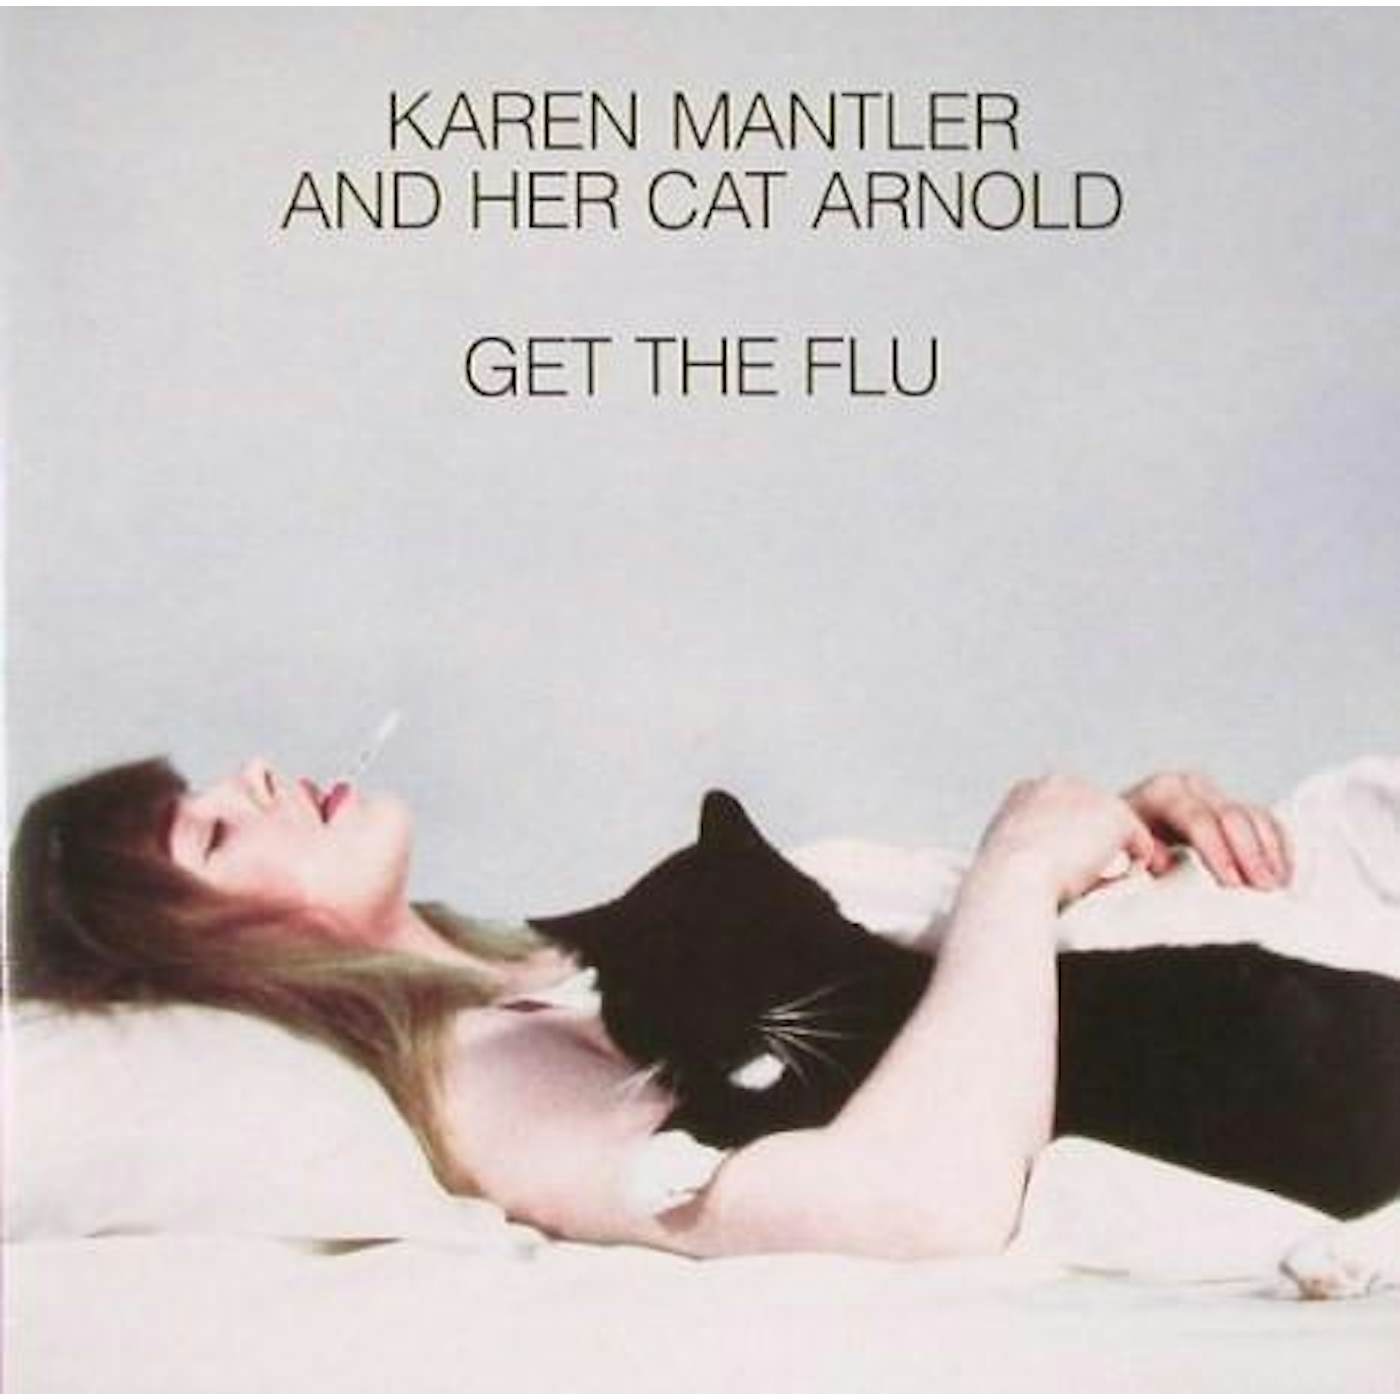 Karen Mantler AND HER CAT ARNOLD... Vinyl Record